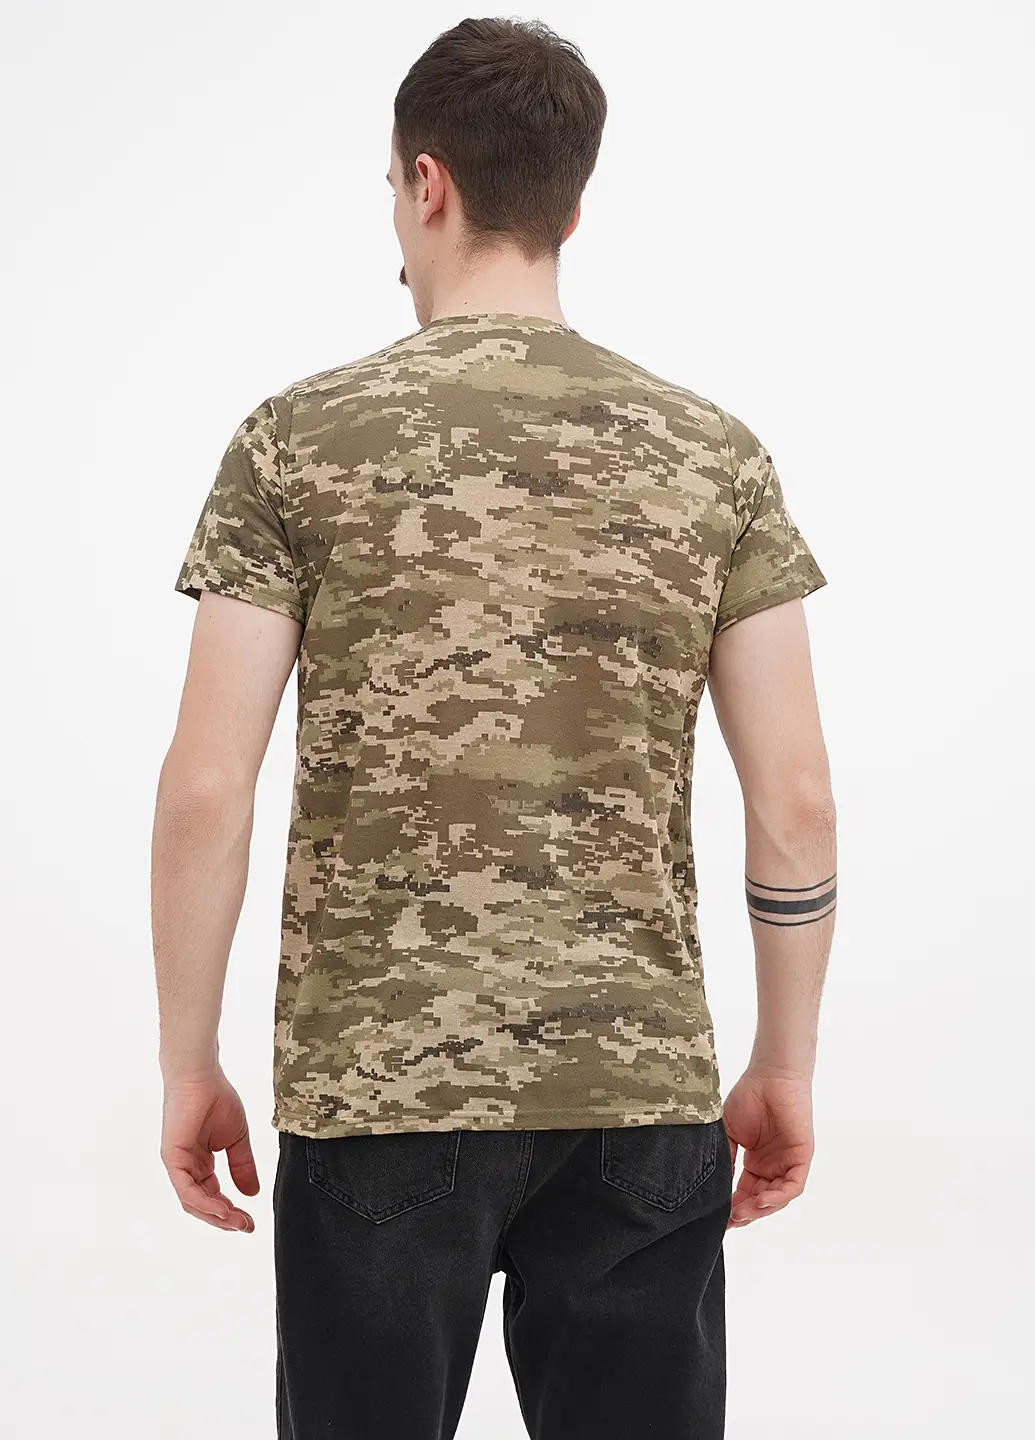 Хаки (оливковая) мужская футболка, круглое горло Sport Line